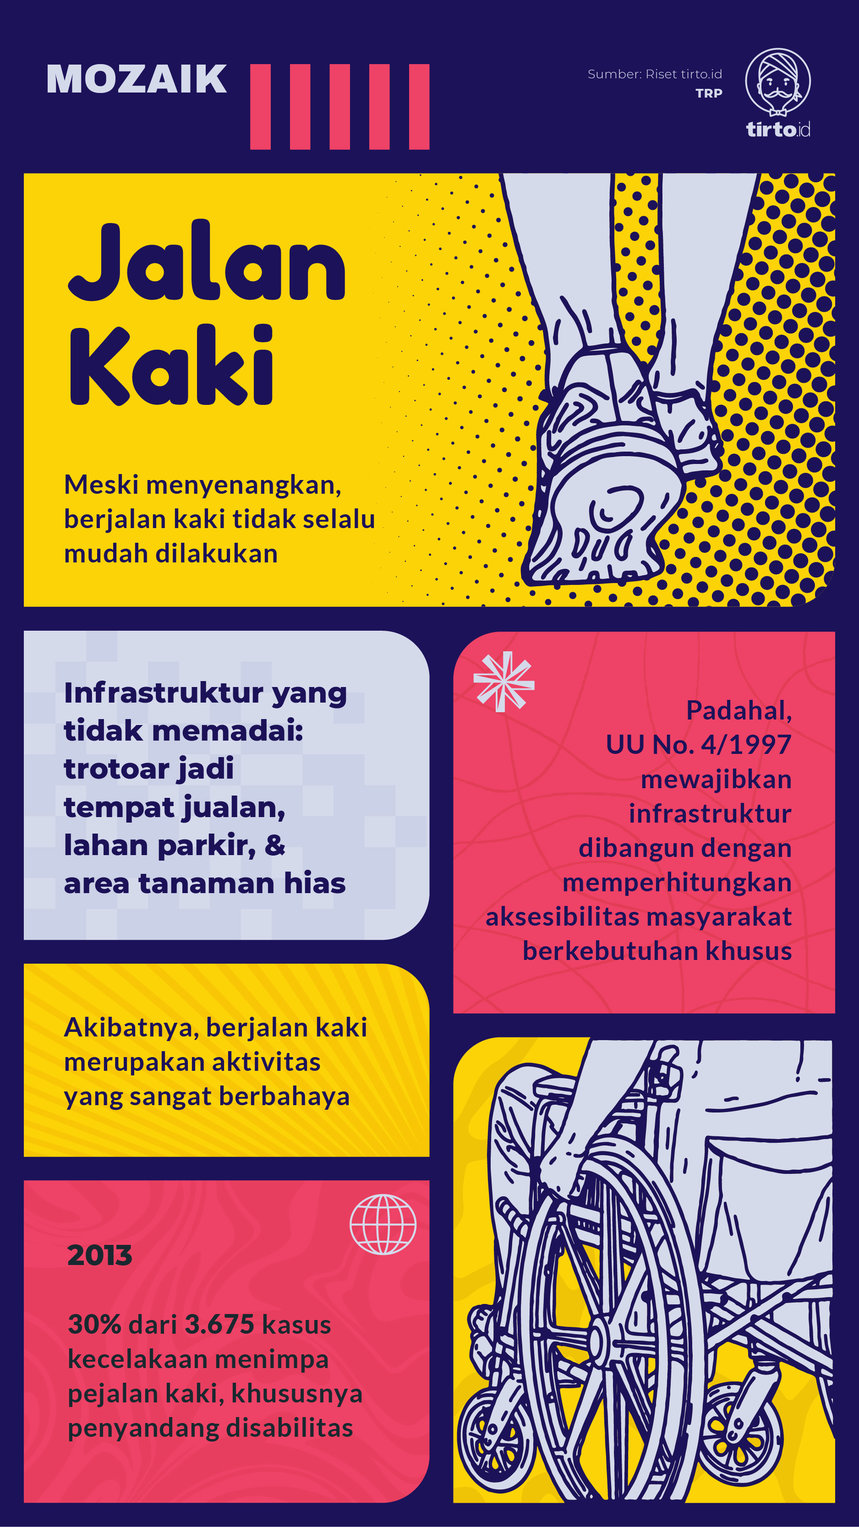 Infografik Mozaik Jalan Kaki